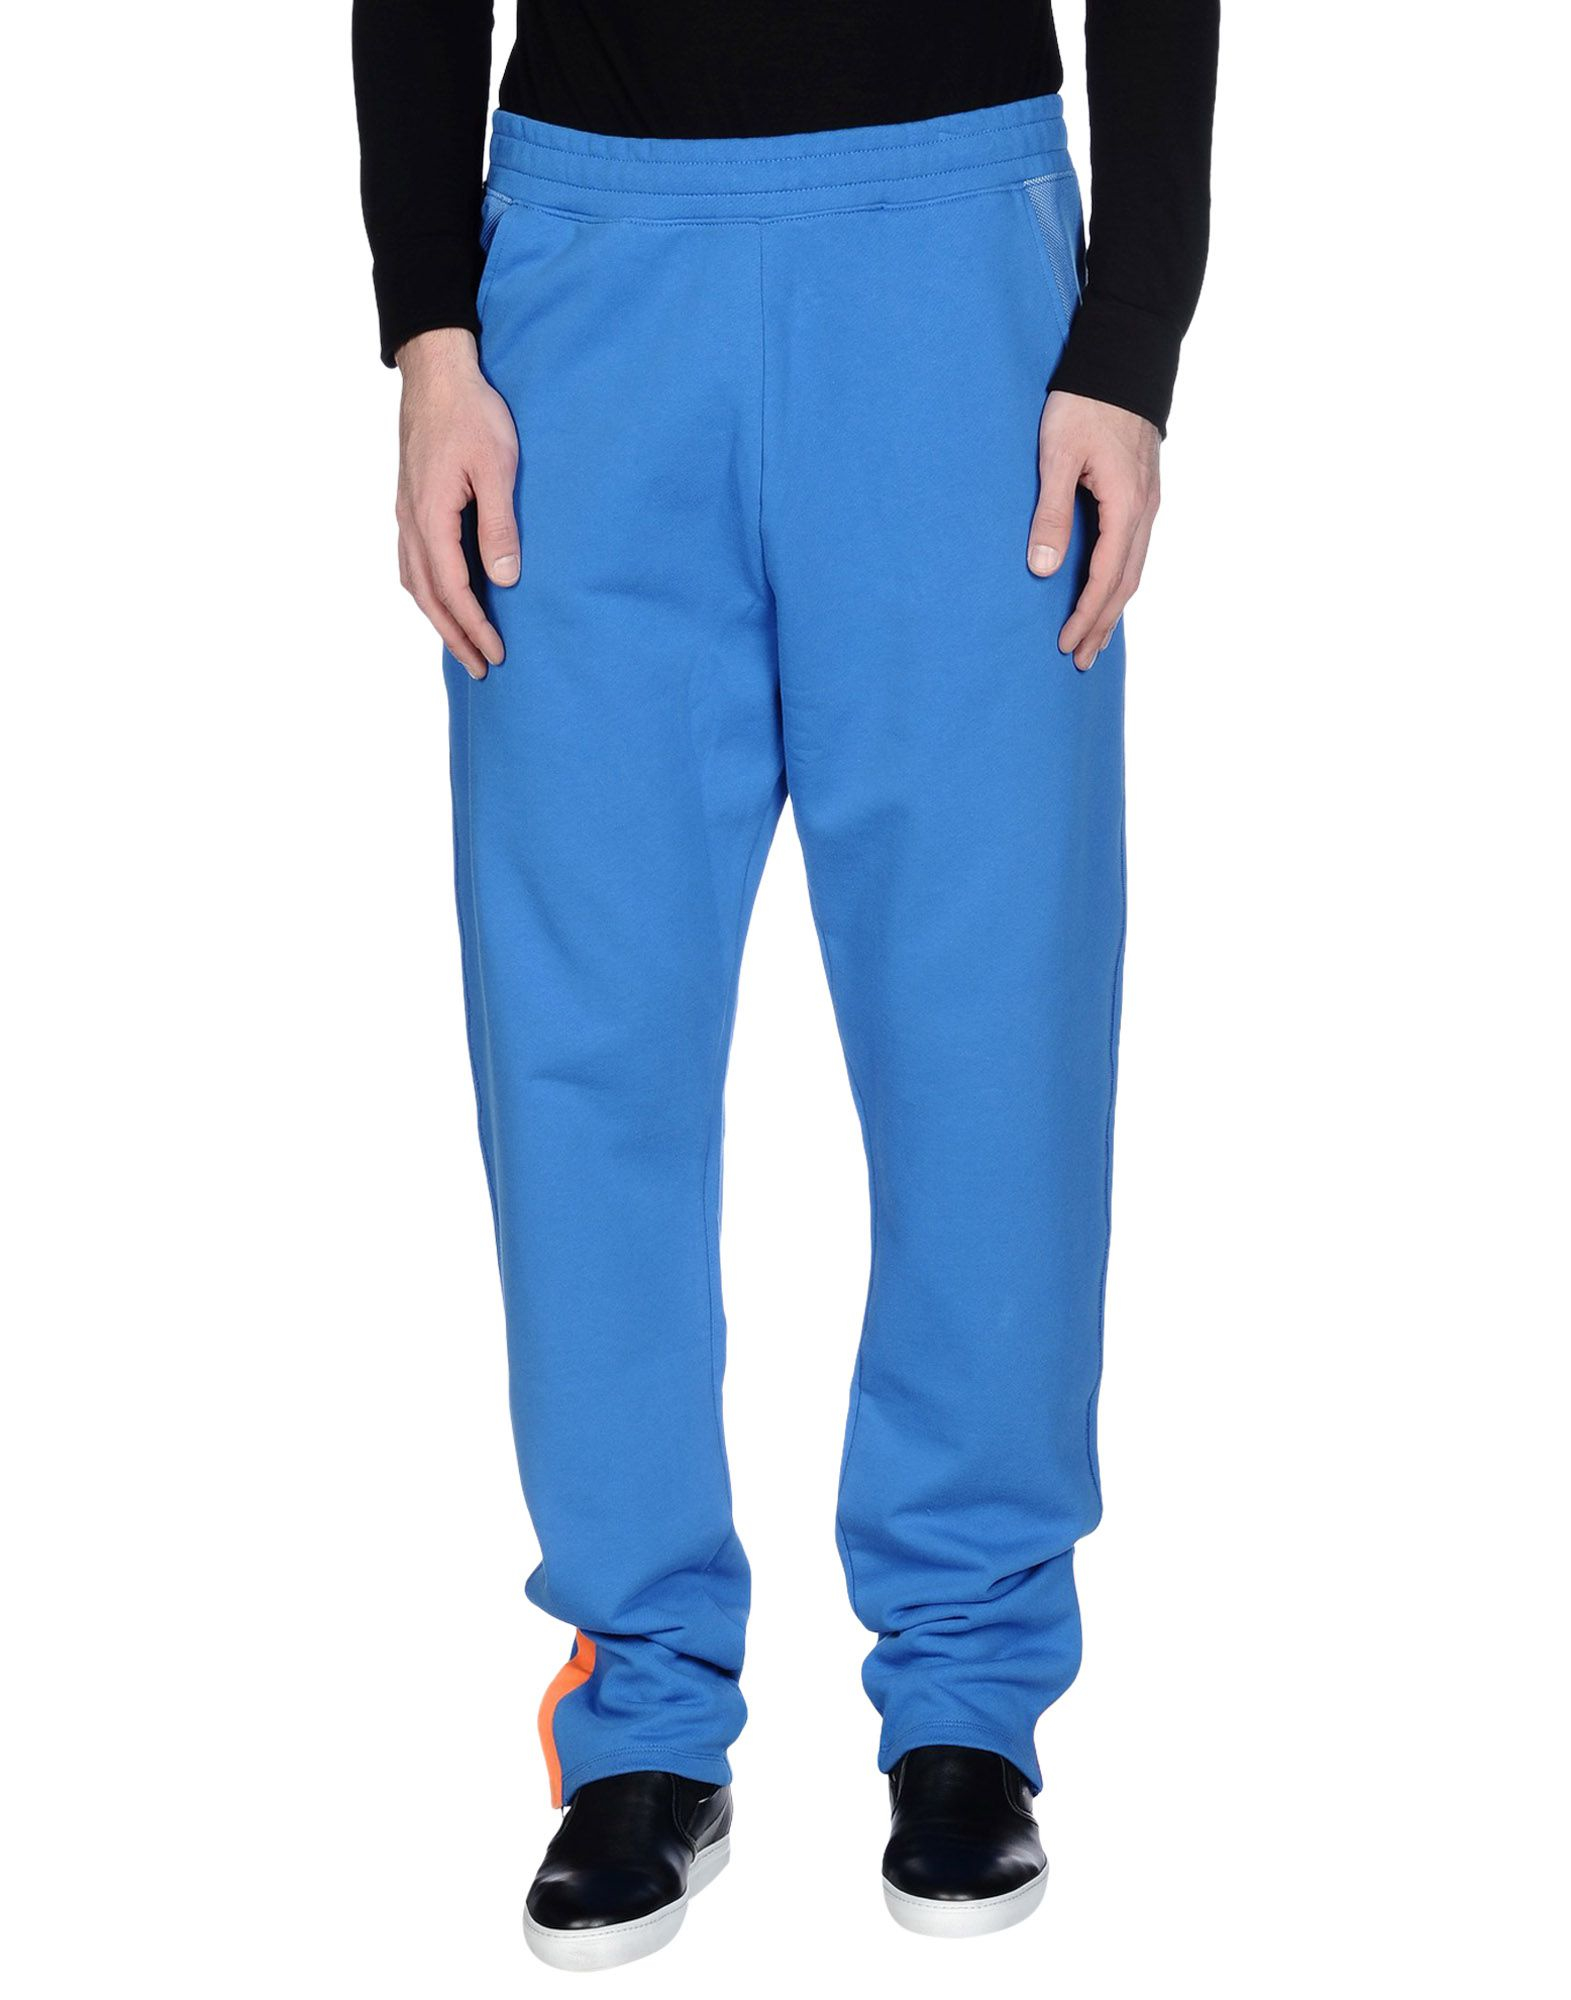 Lyst - Bikkembergs Casual Pants in Blue for Men